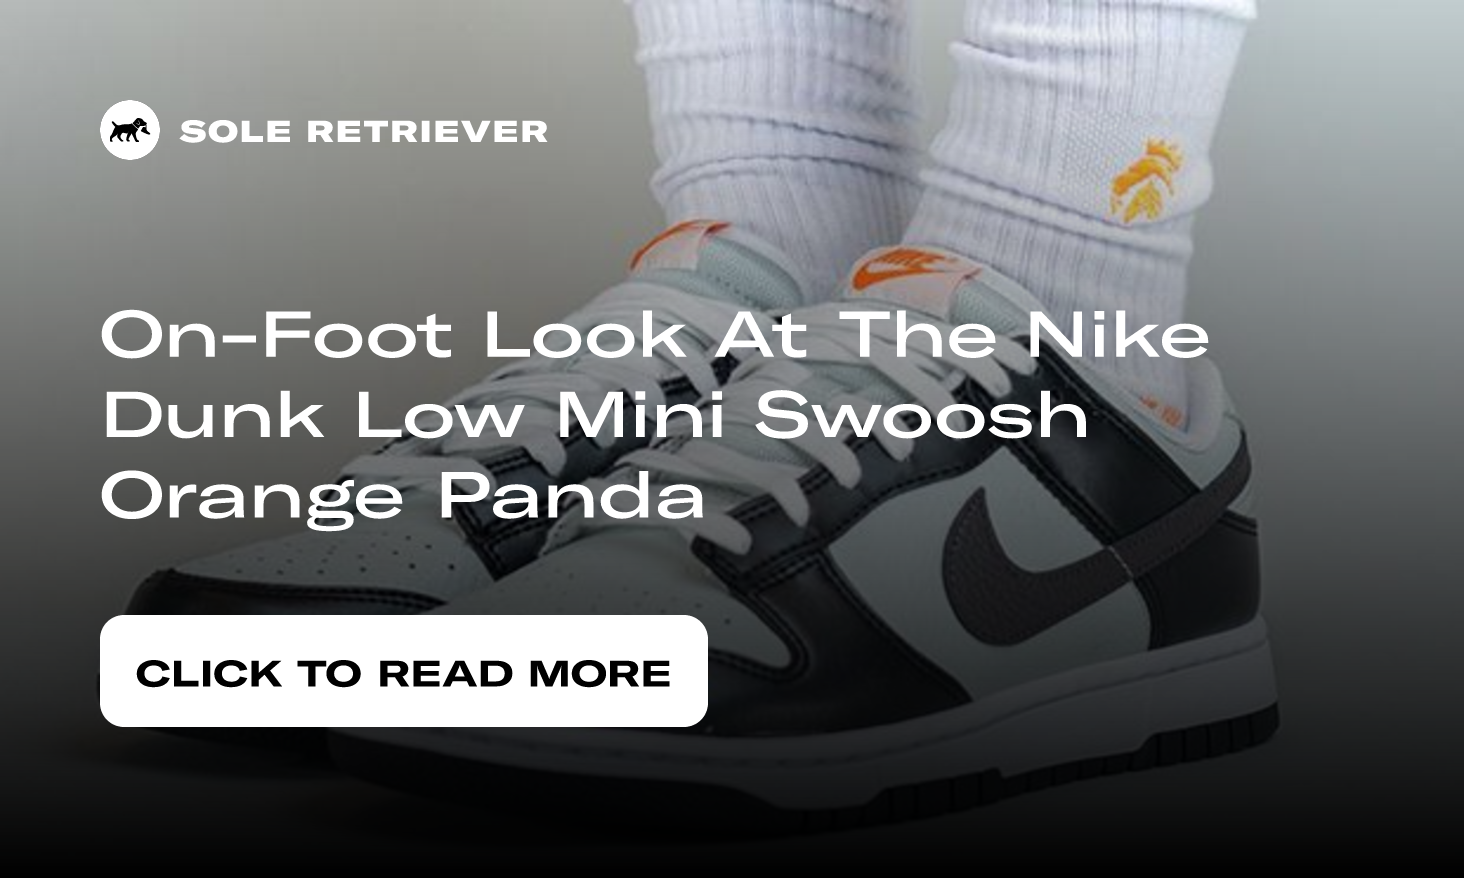 On-Foot Look At The Nike Dunk Low Mini Swoosh Orange Panda